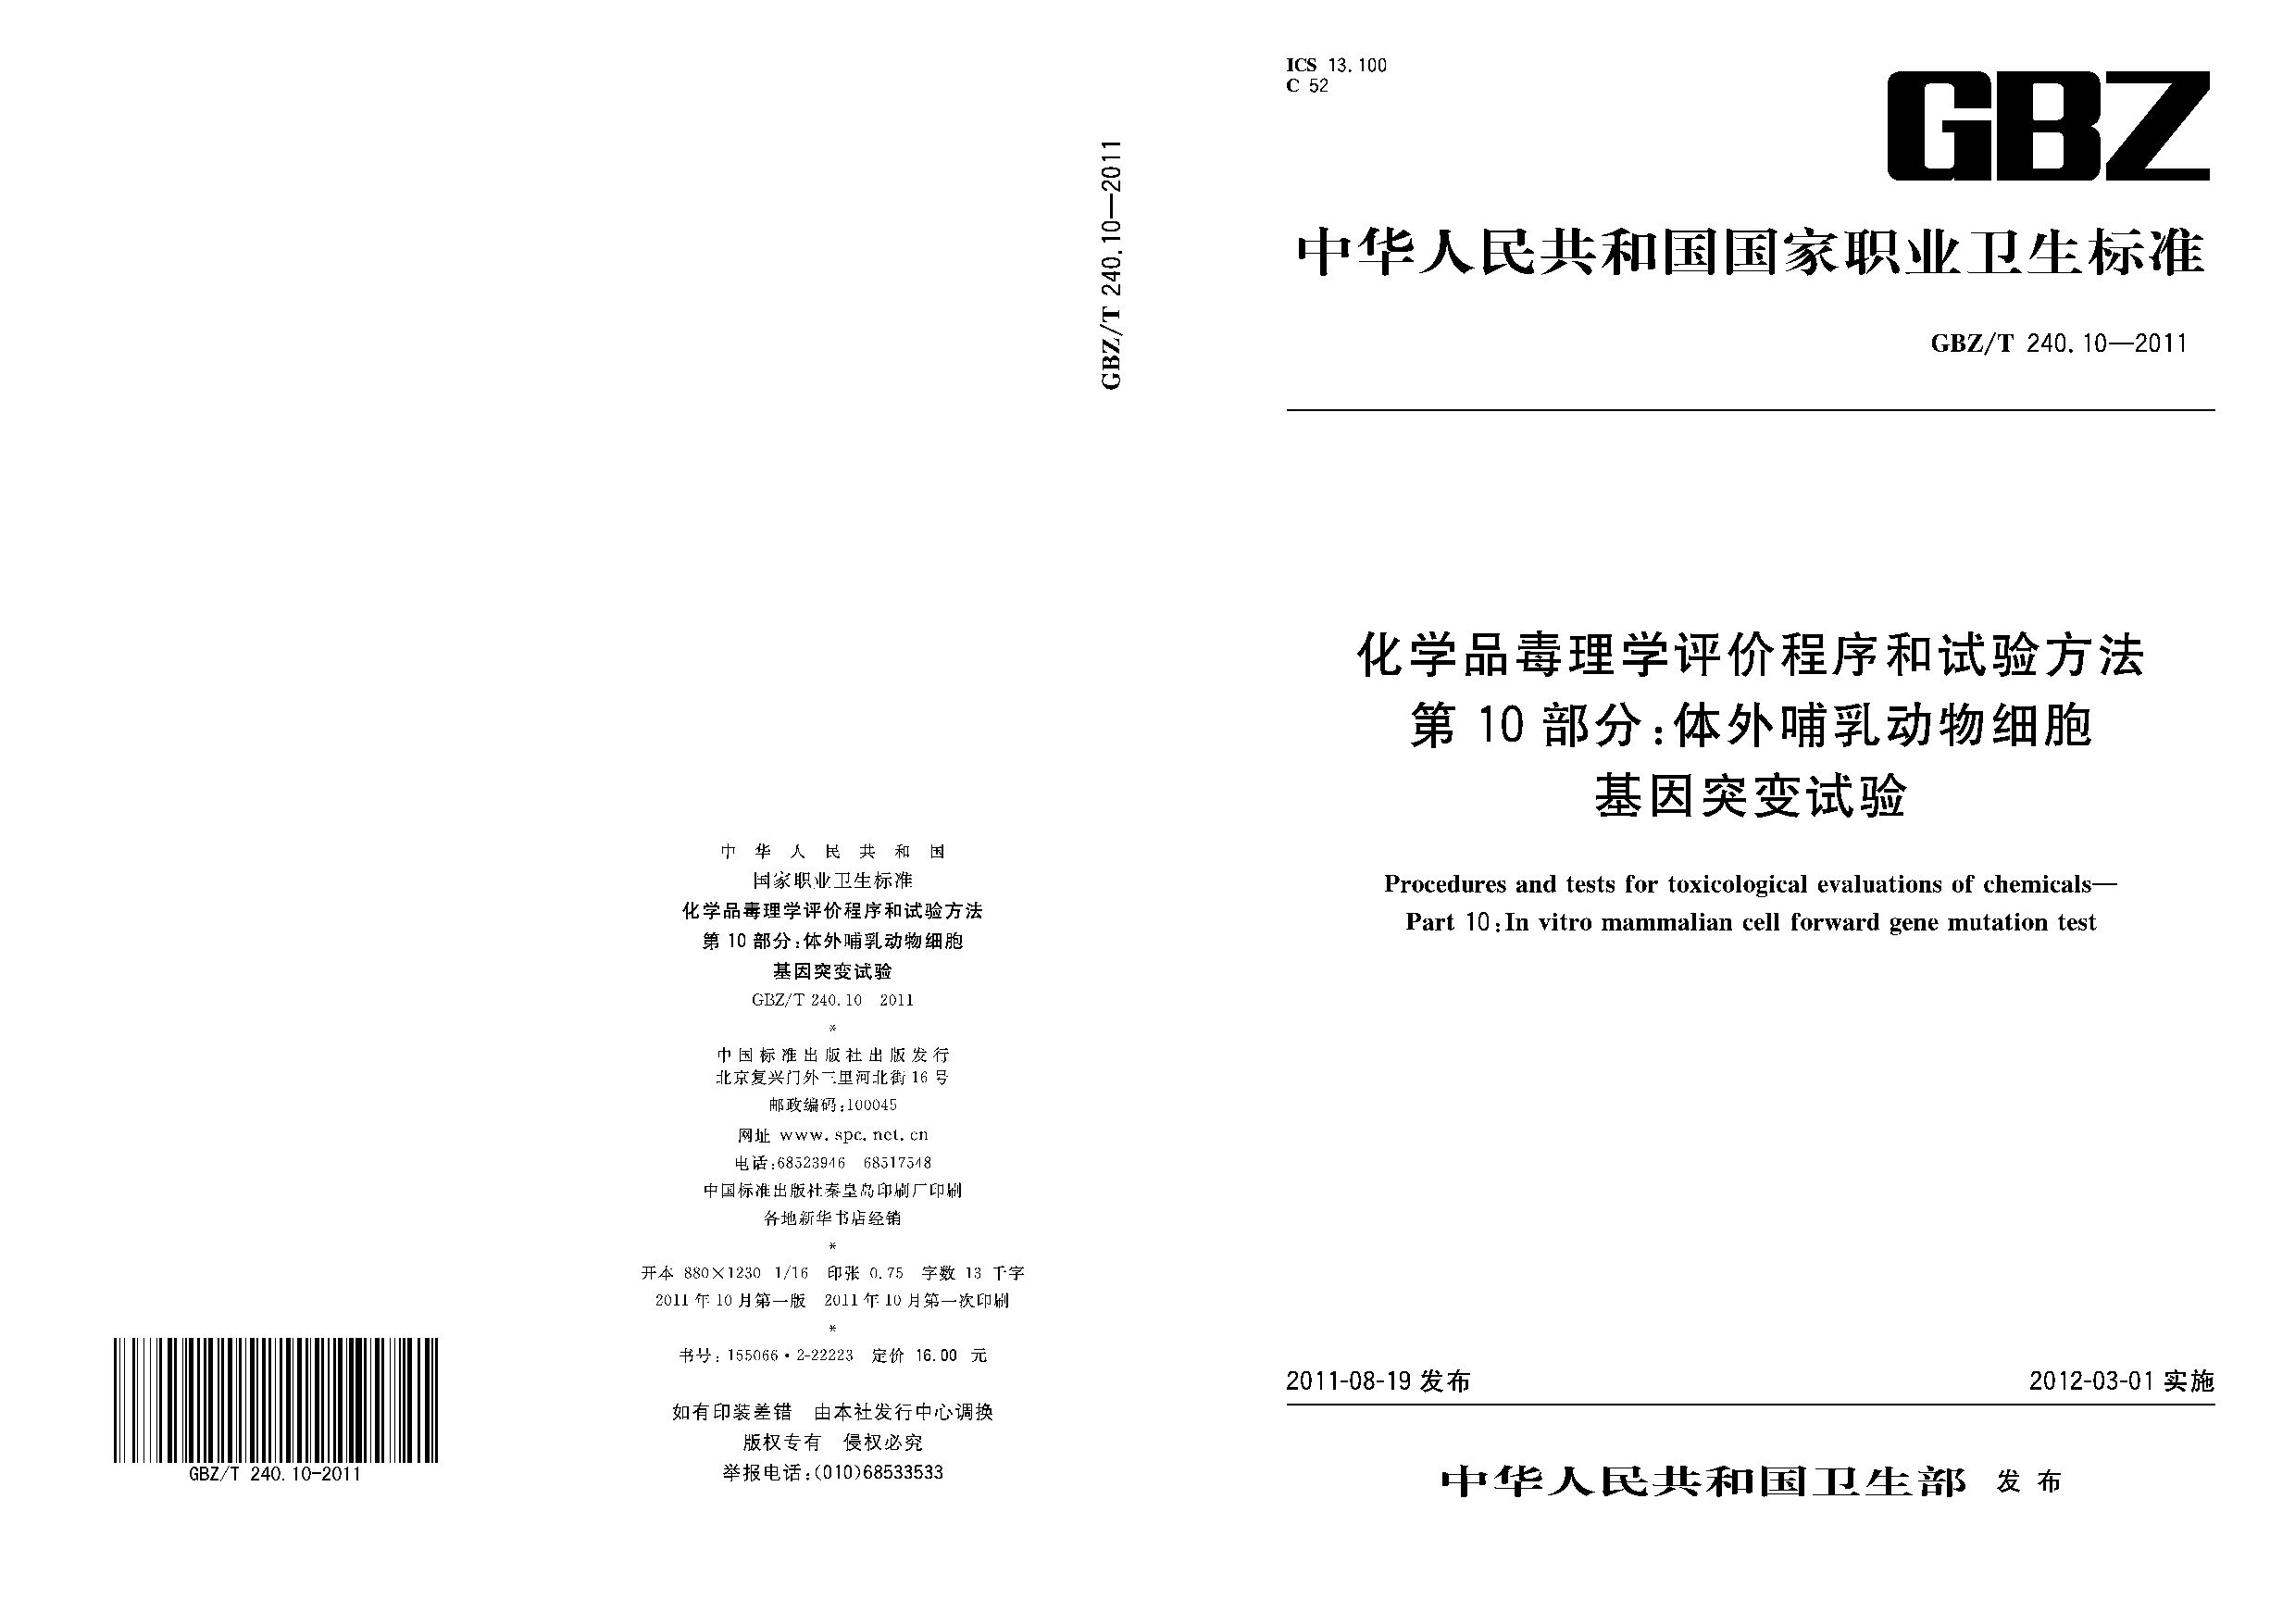 GBZ/T 240.10-2011封面图